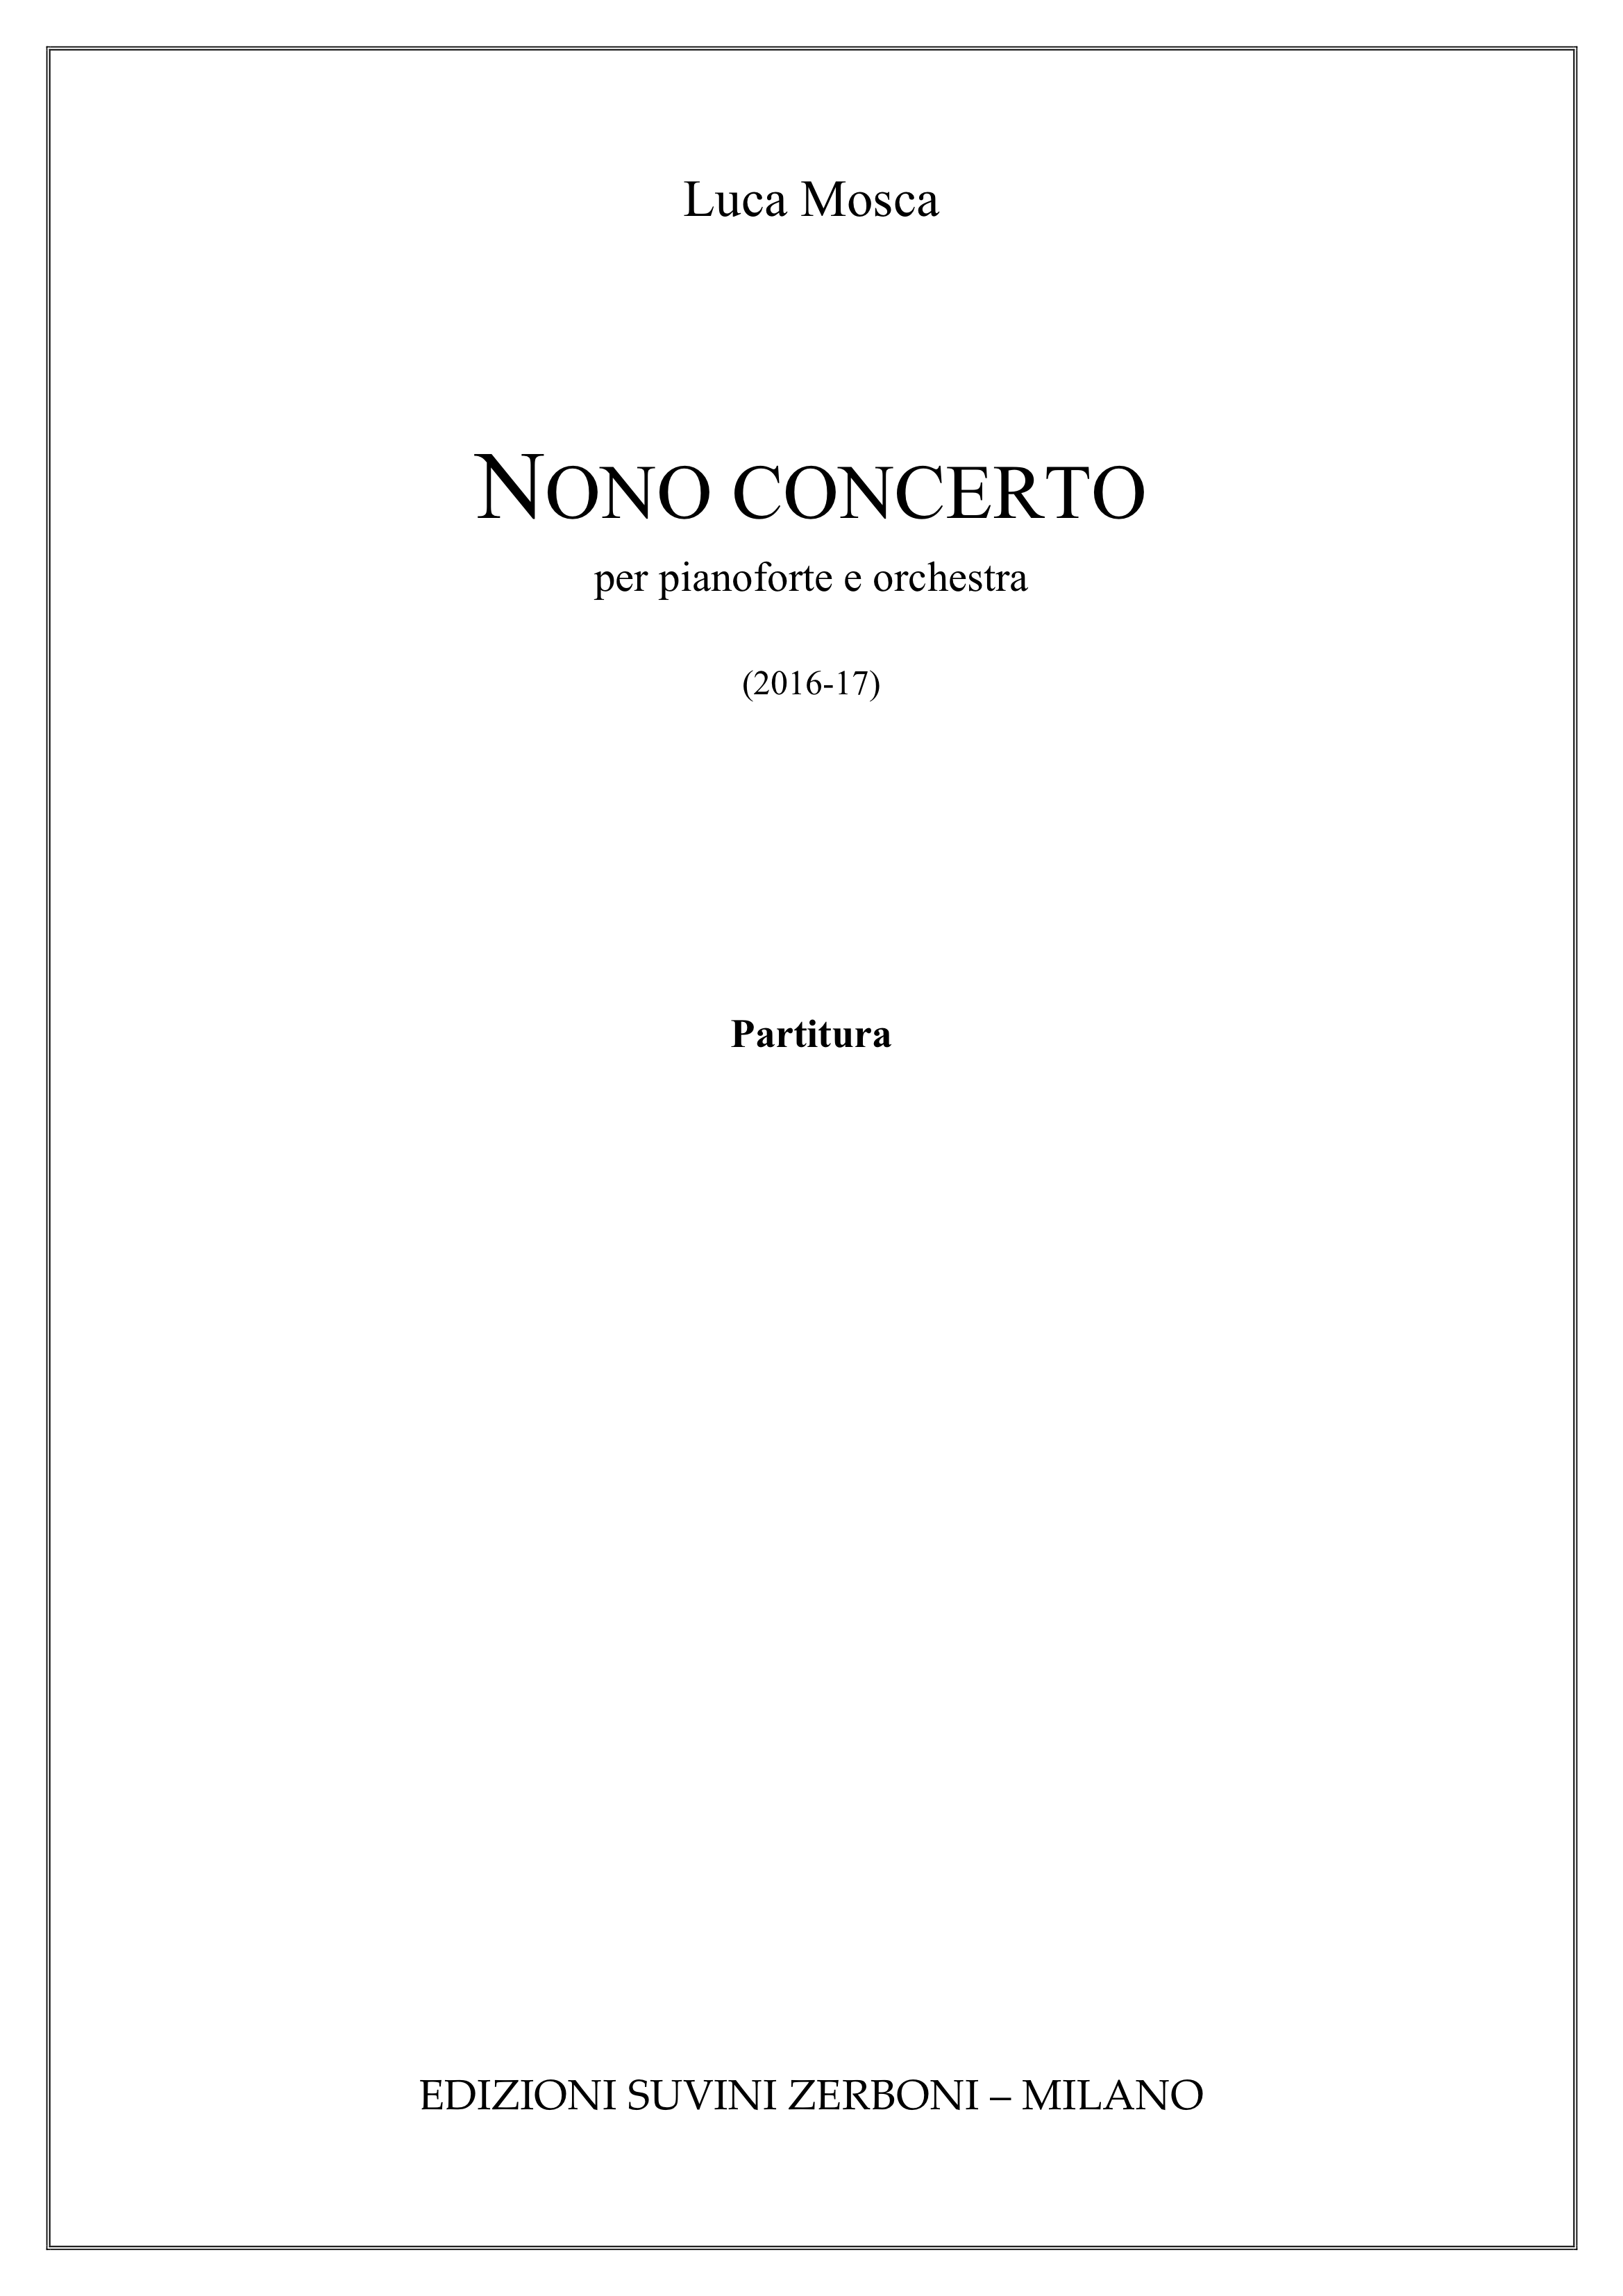 Nono Concerto_Mosca 1 01